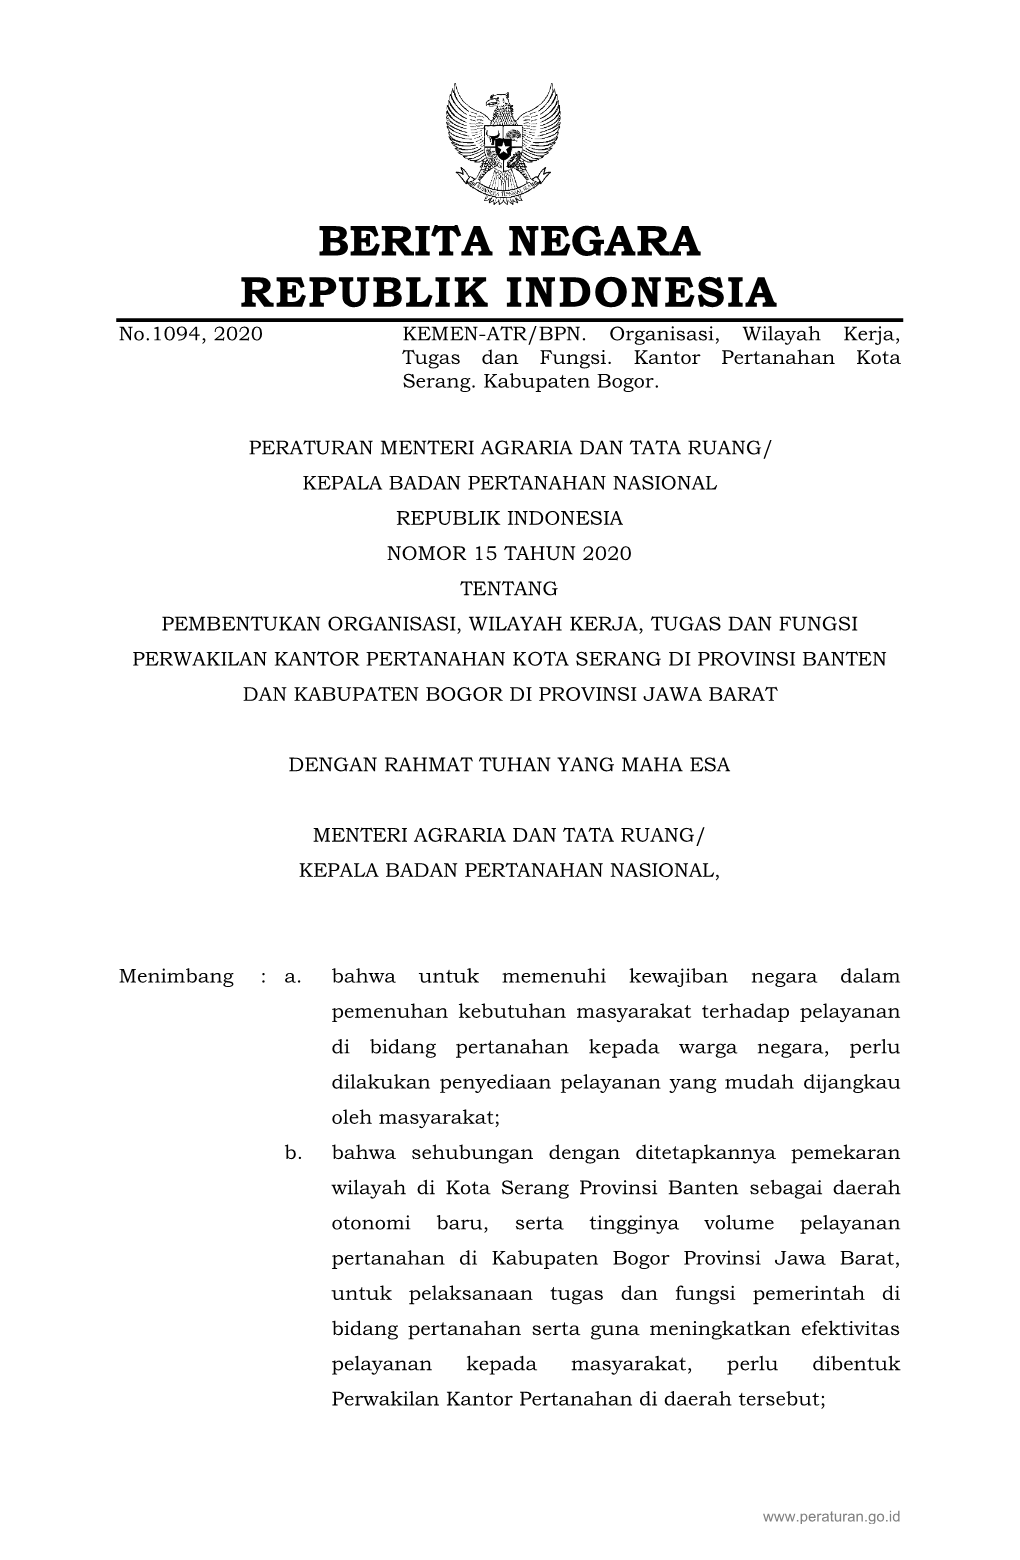 BERITA NEGARA REPUBLIK INDONESIA No.1094, 2020 KEMEN-ATR/BPN